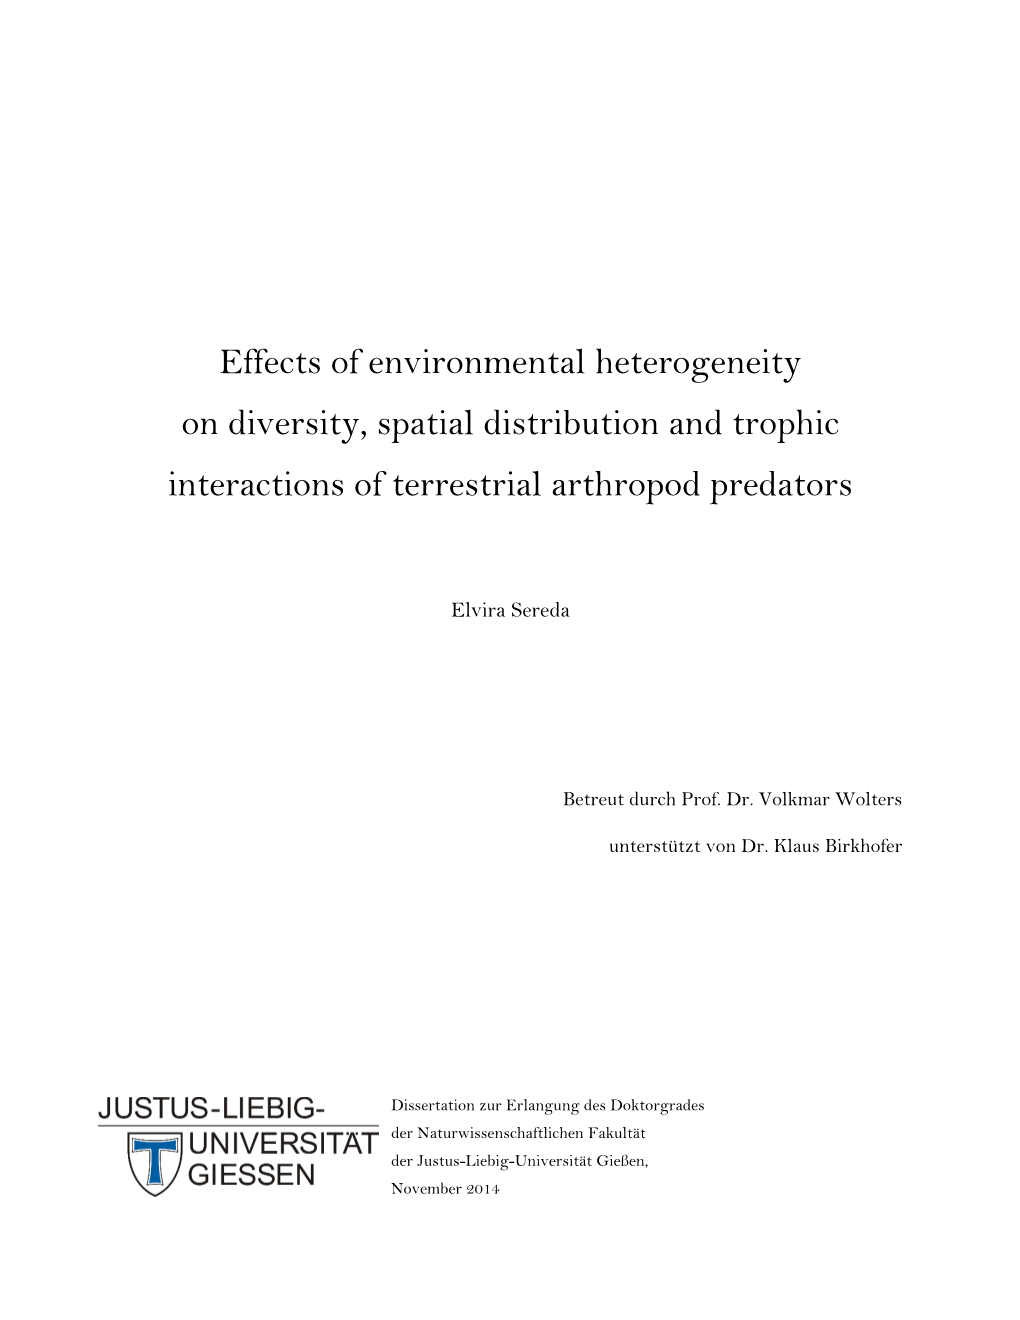 Effects of Environmental Heterogeneity on Diversity, Spatial Distribution and Trophic Interactions of Terrestrial Arthropod Predators